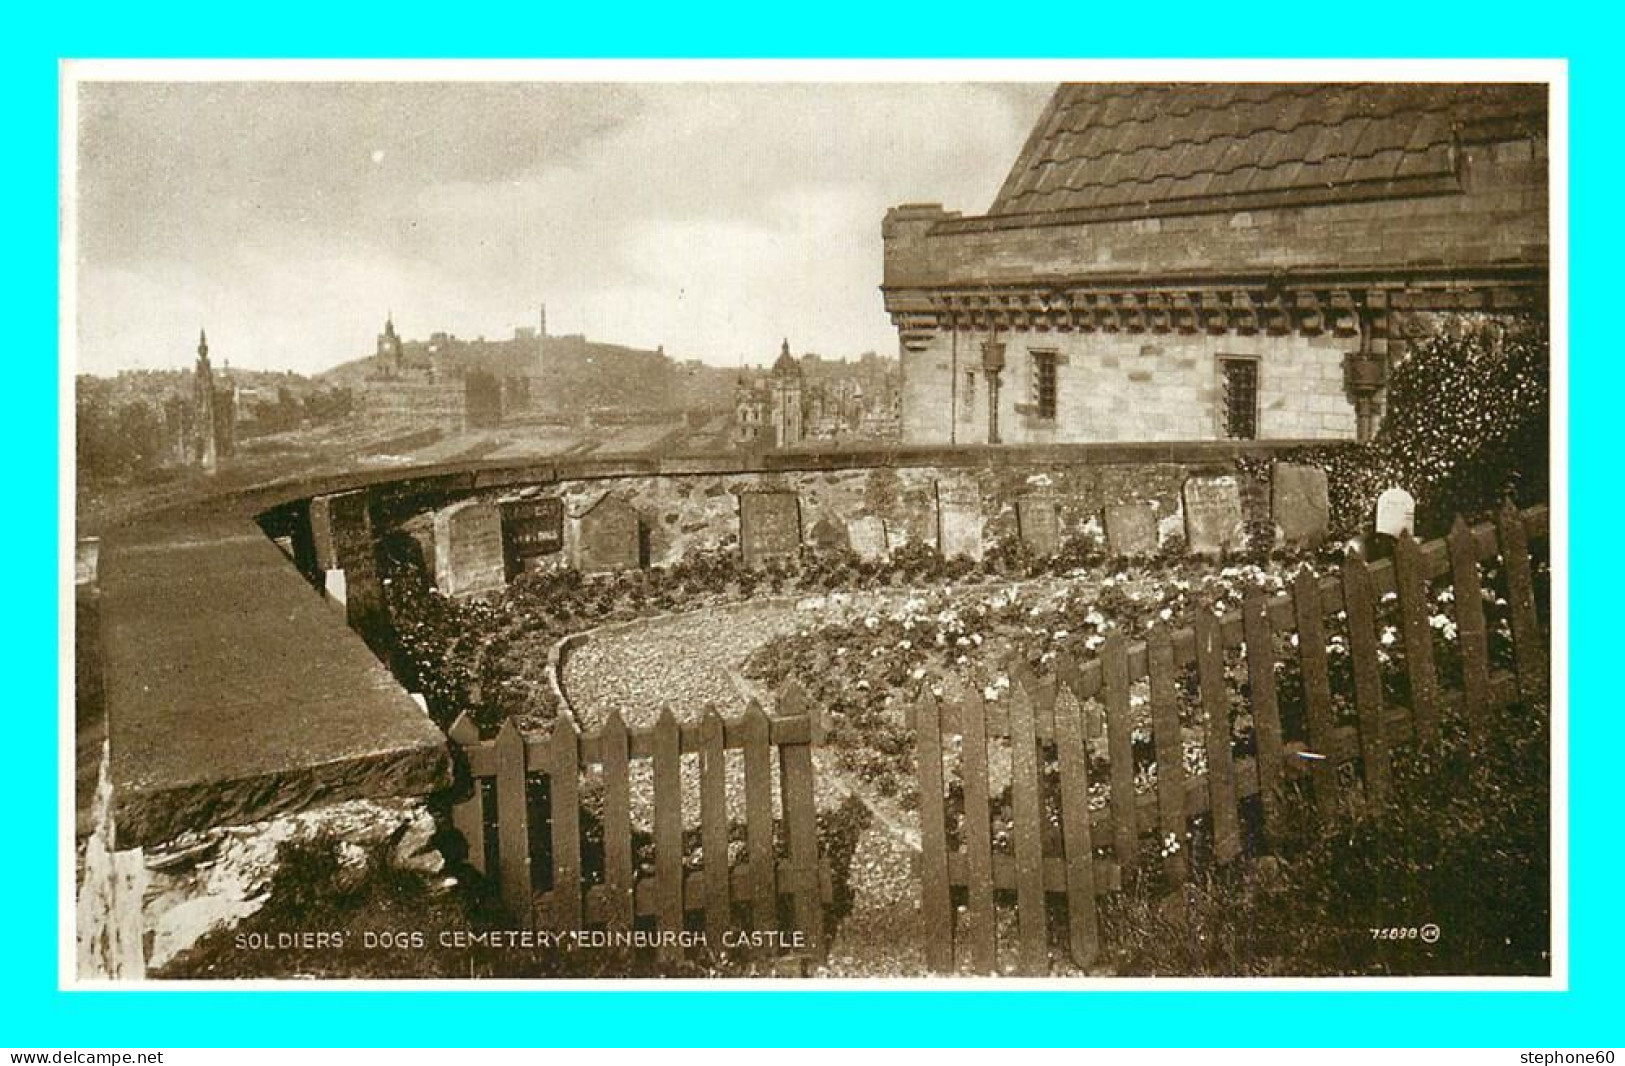 A845 / 549  Soldiers Dogs Cemetery EDINBURGH CASTLE - Midlothian/ Edinburgh